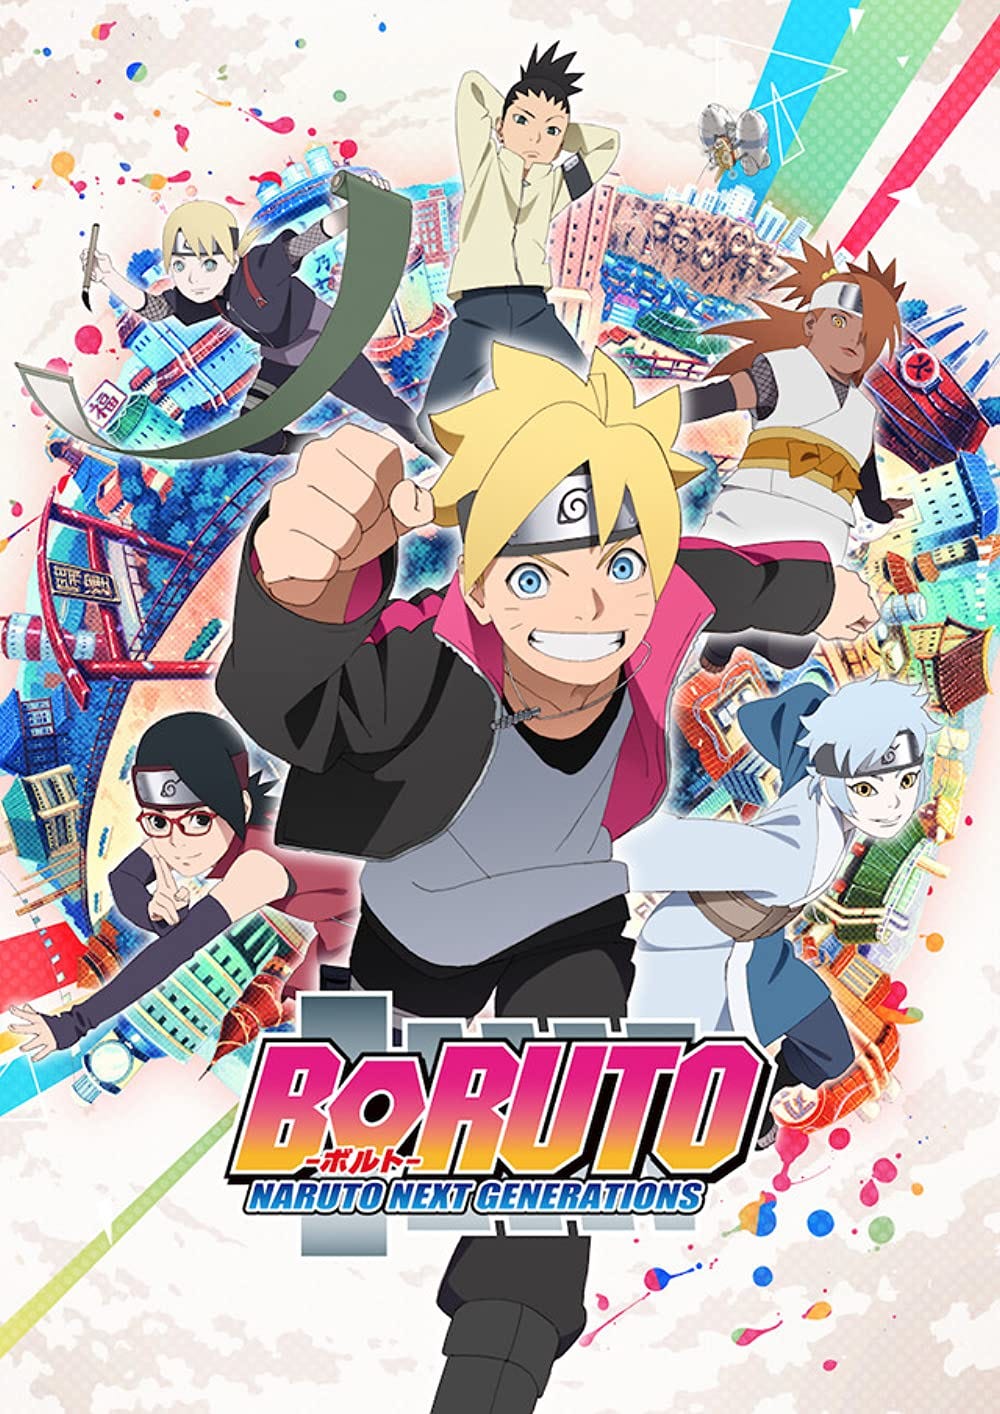 Boruto: Naruto Next Generations” Manga Issue 62 Review: Run-in